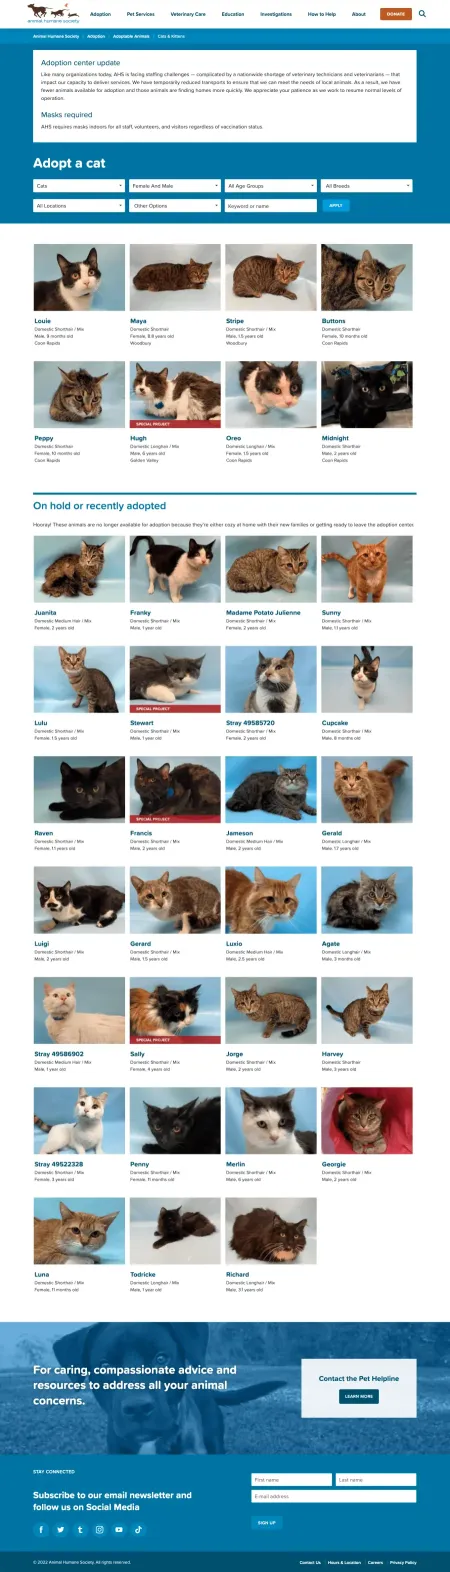 Animal Humane Society adoption web page